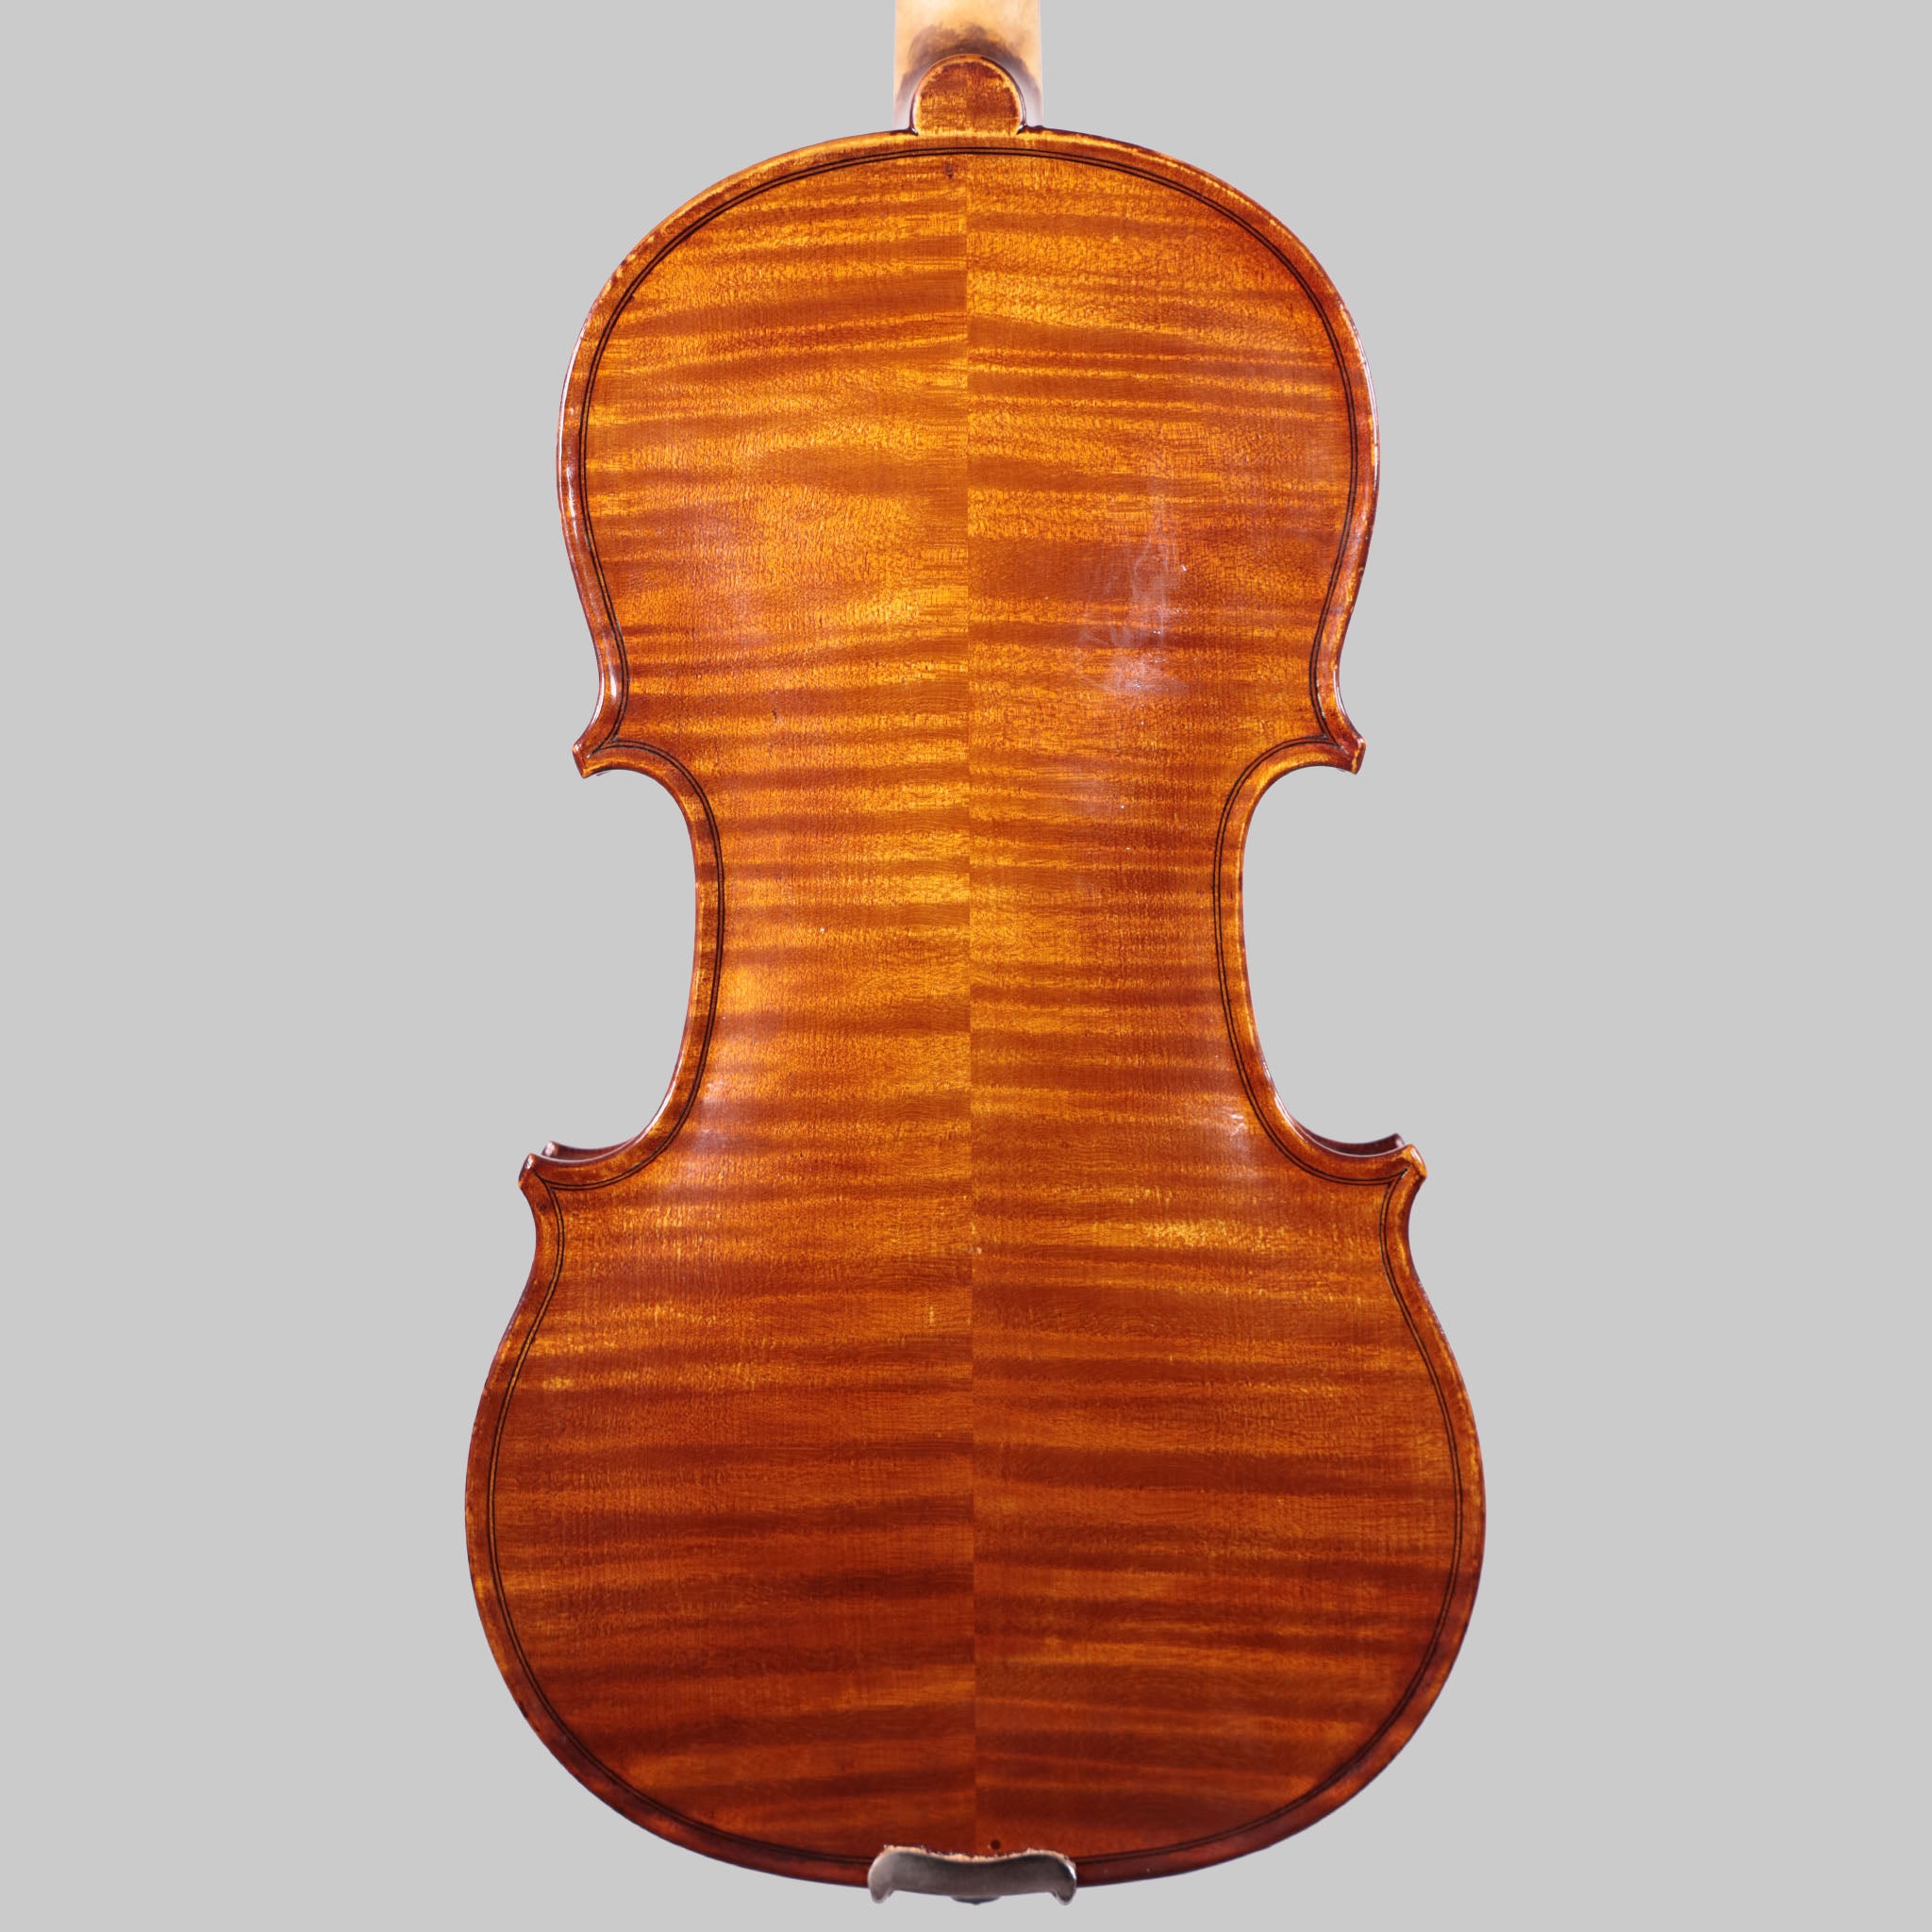 A.M. Bilva, Cremona Italy 'Stradivari' Violin 2012